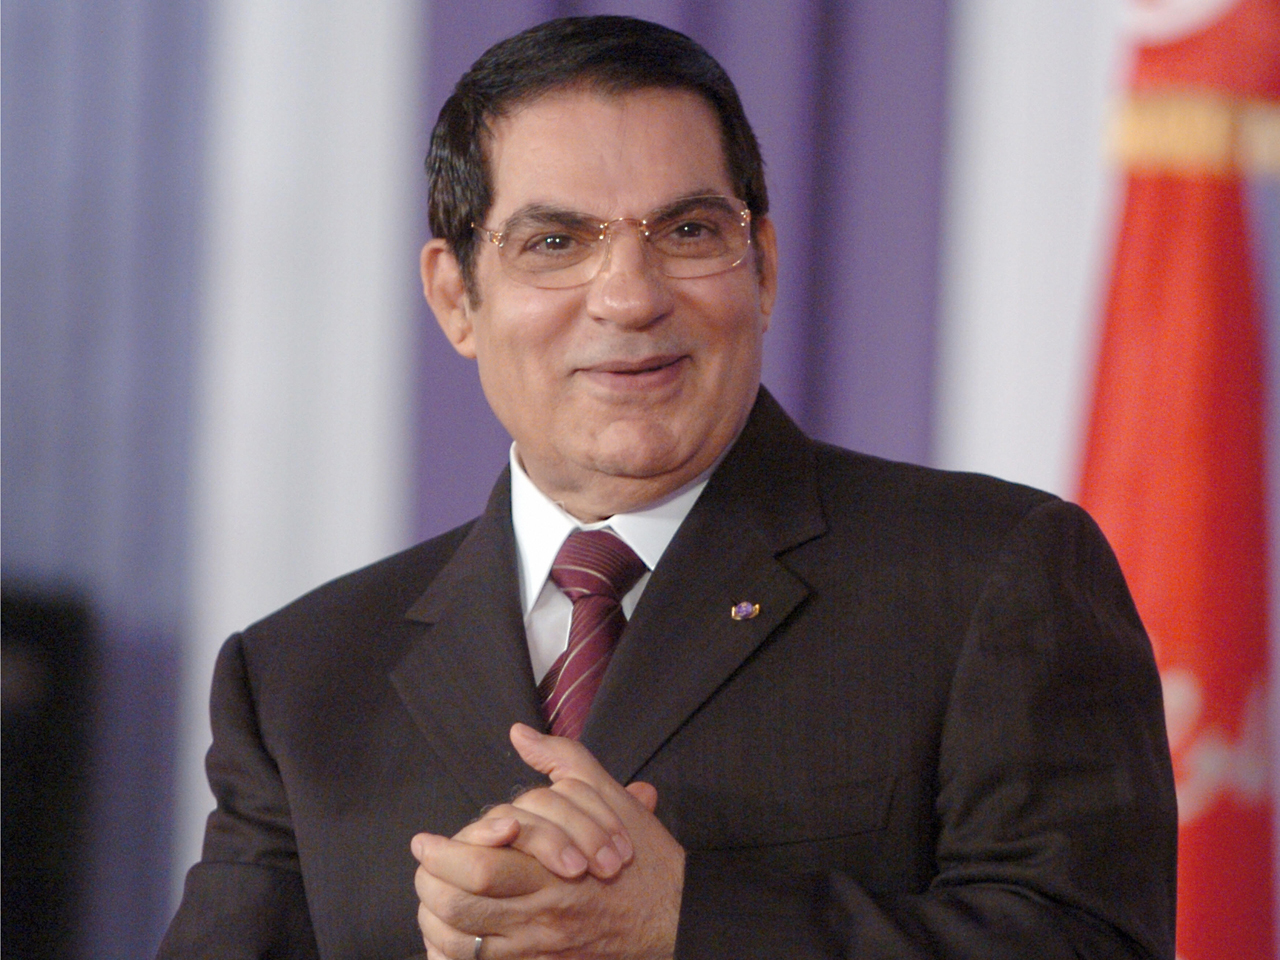 Ousted Tunisia leader Zine El Abidine Ben Ali given 20 year sentence ...